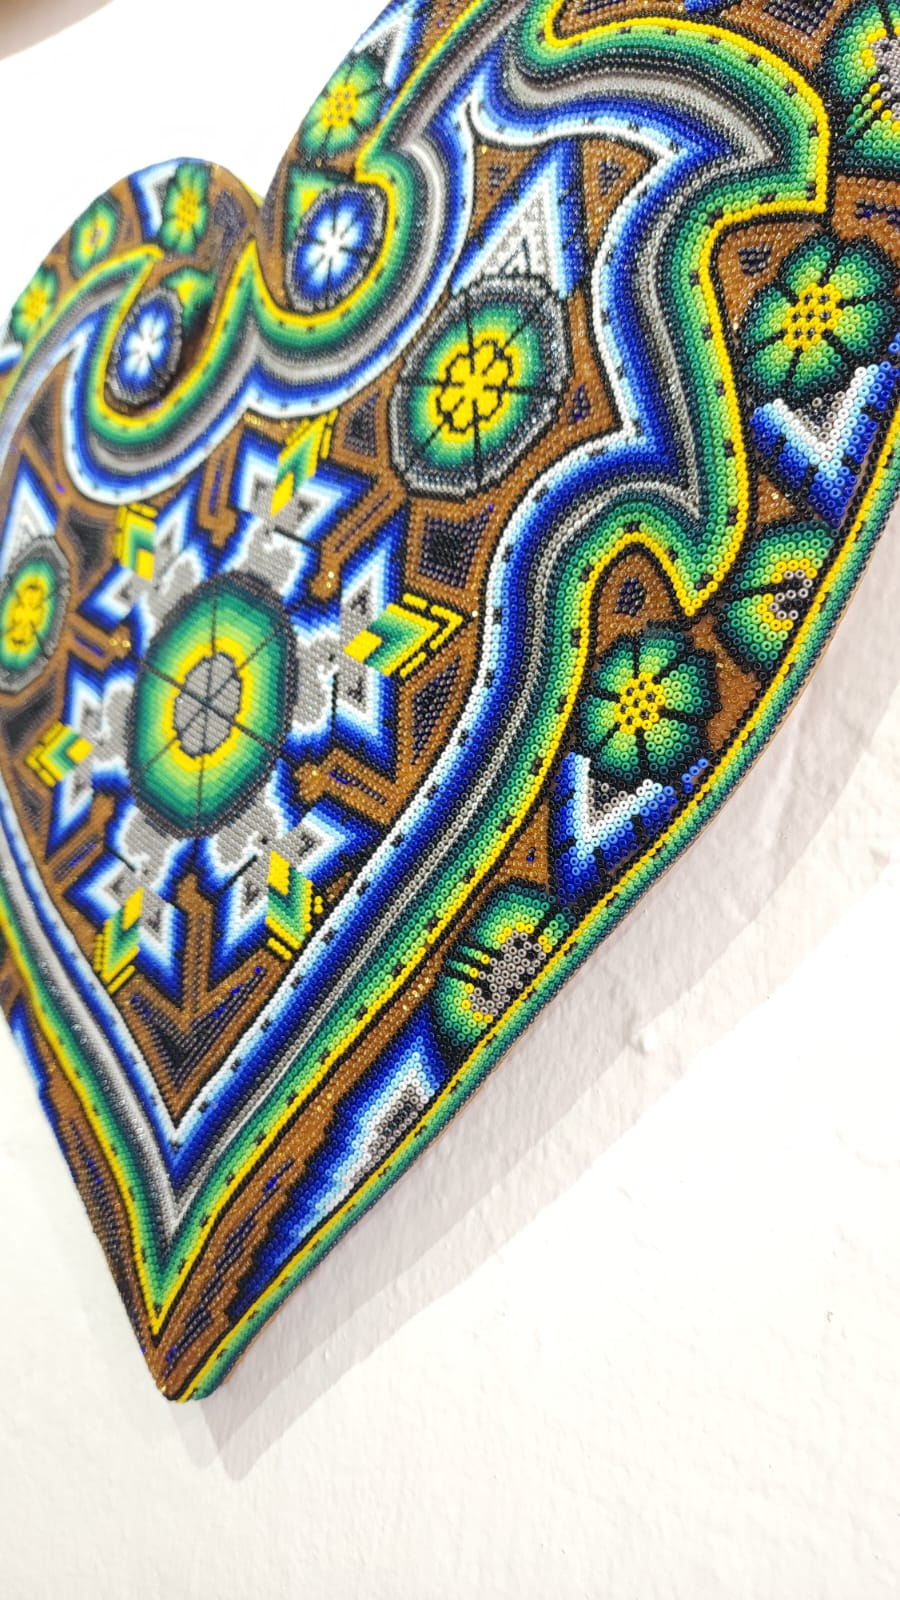 Huichol Hand Beaded Mexican Folk Art Heart  By  Santos Bautista PP6170